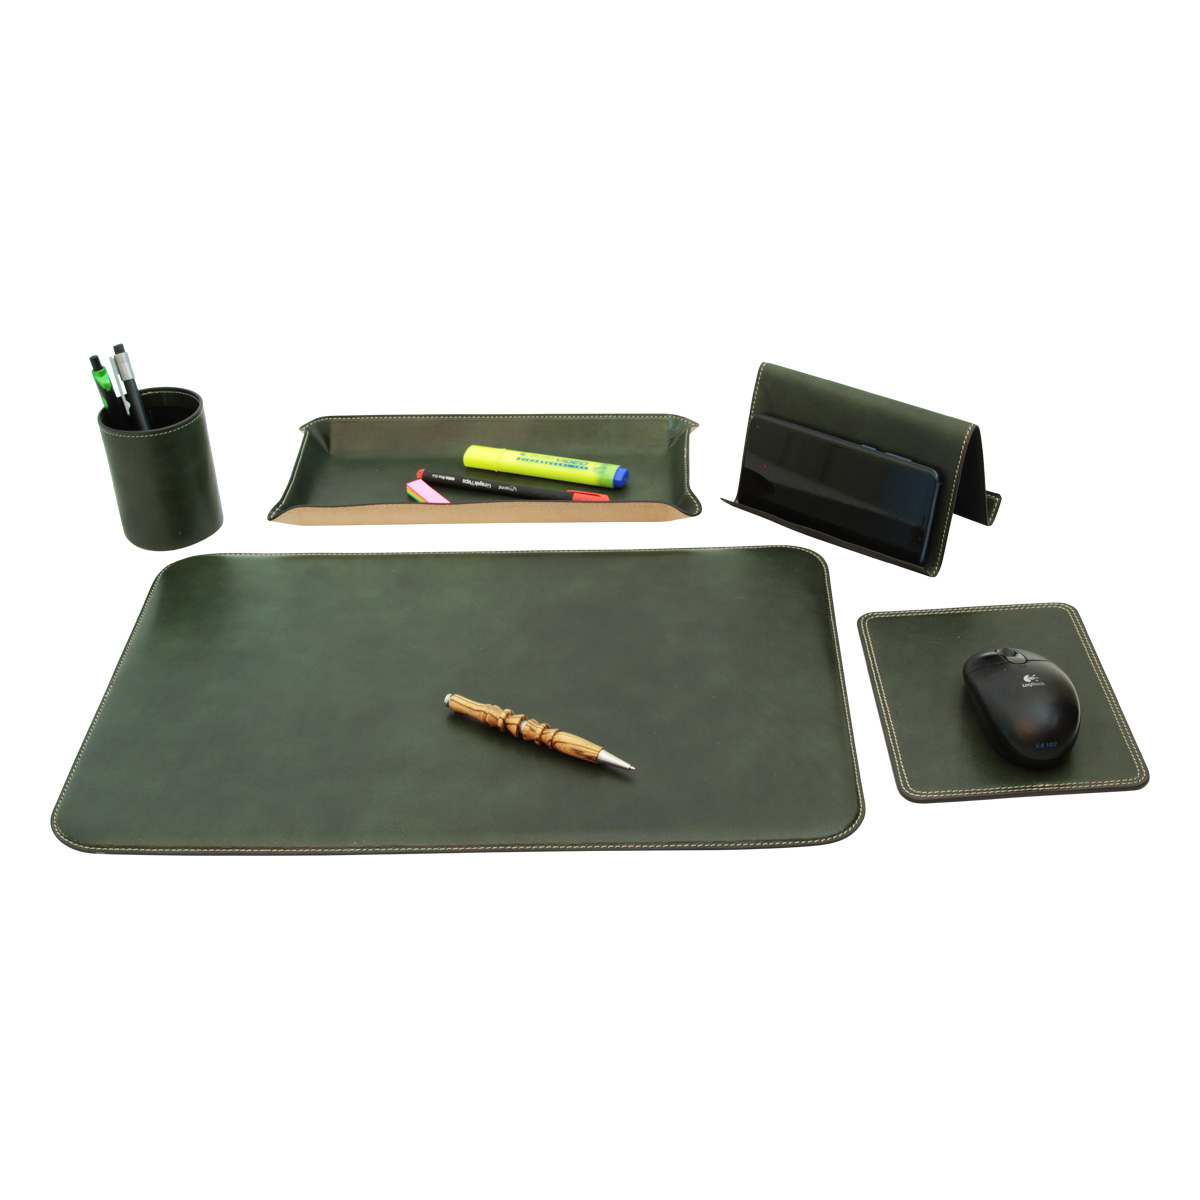 Leather desk kit - 5 pcs   green | 769089VE US | Old Angler Firenze